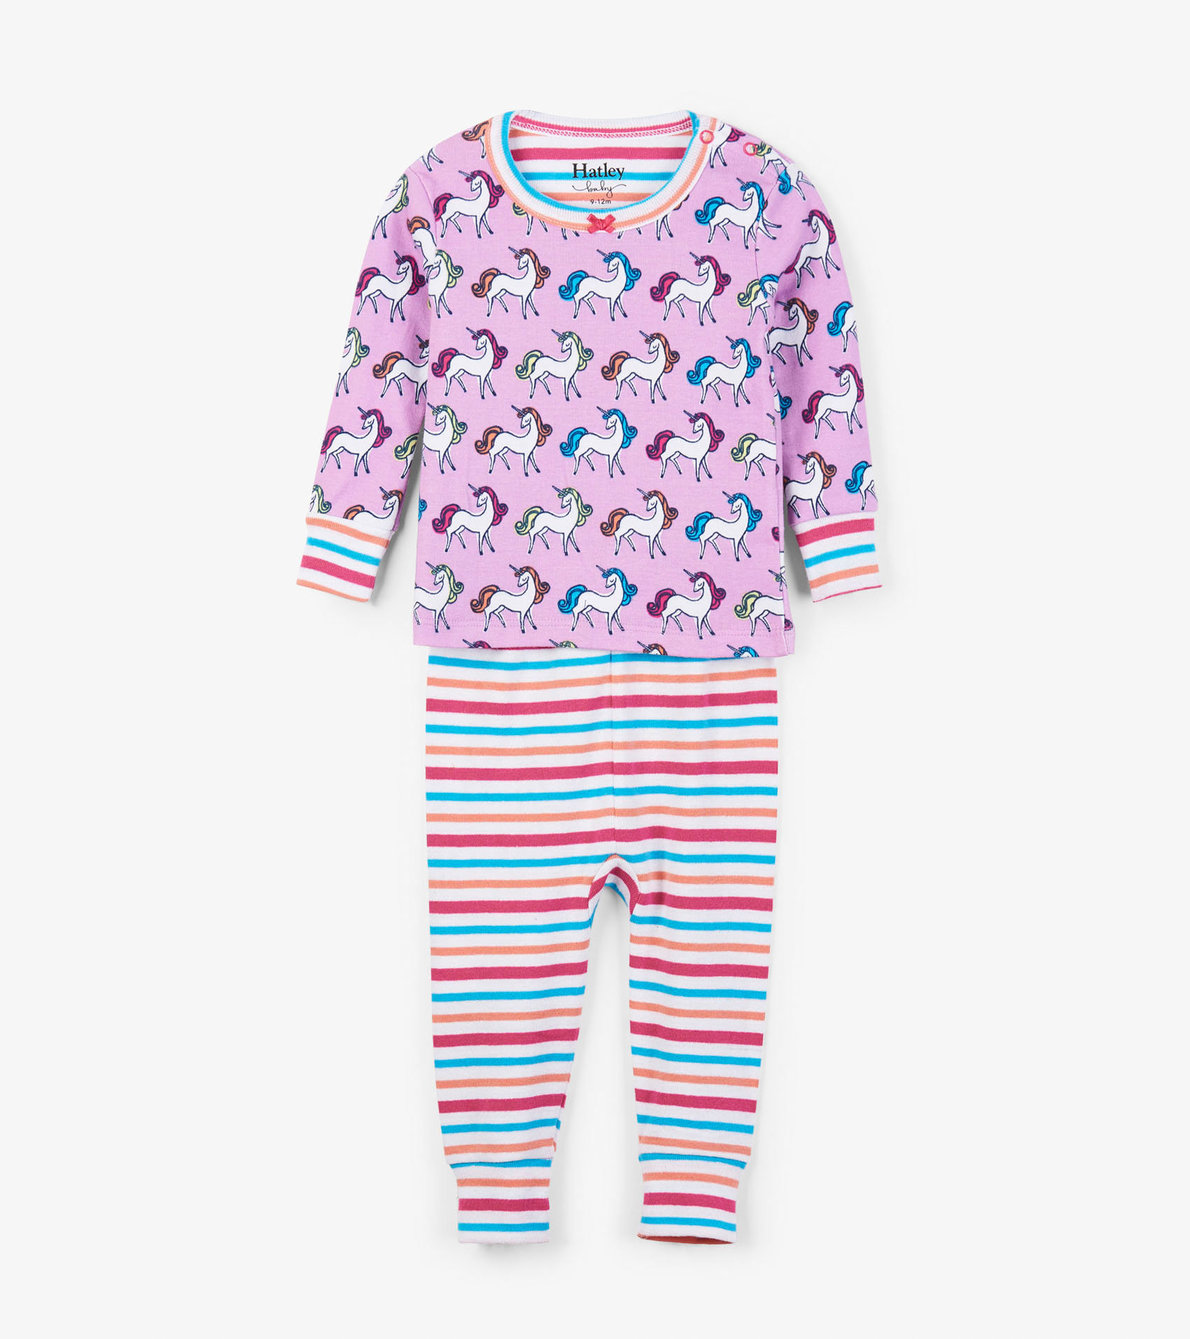 View larger image of Rainbow Unicorns Organic Cotton Baby Pajama Set